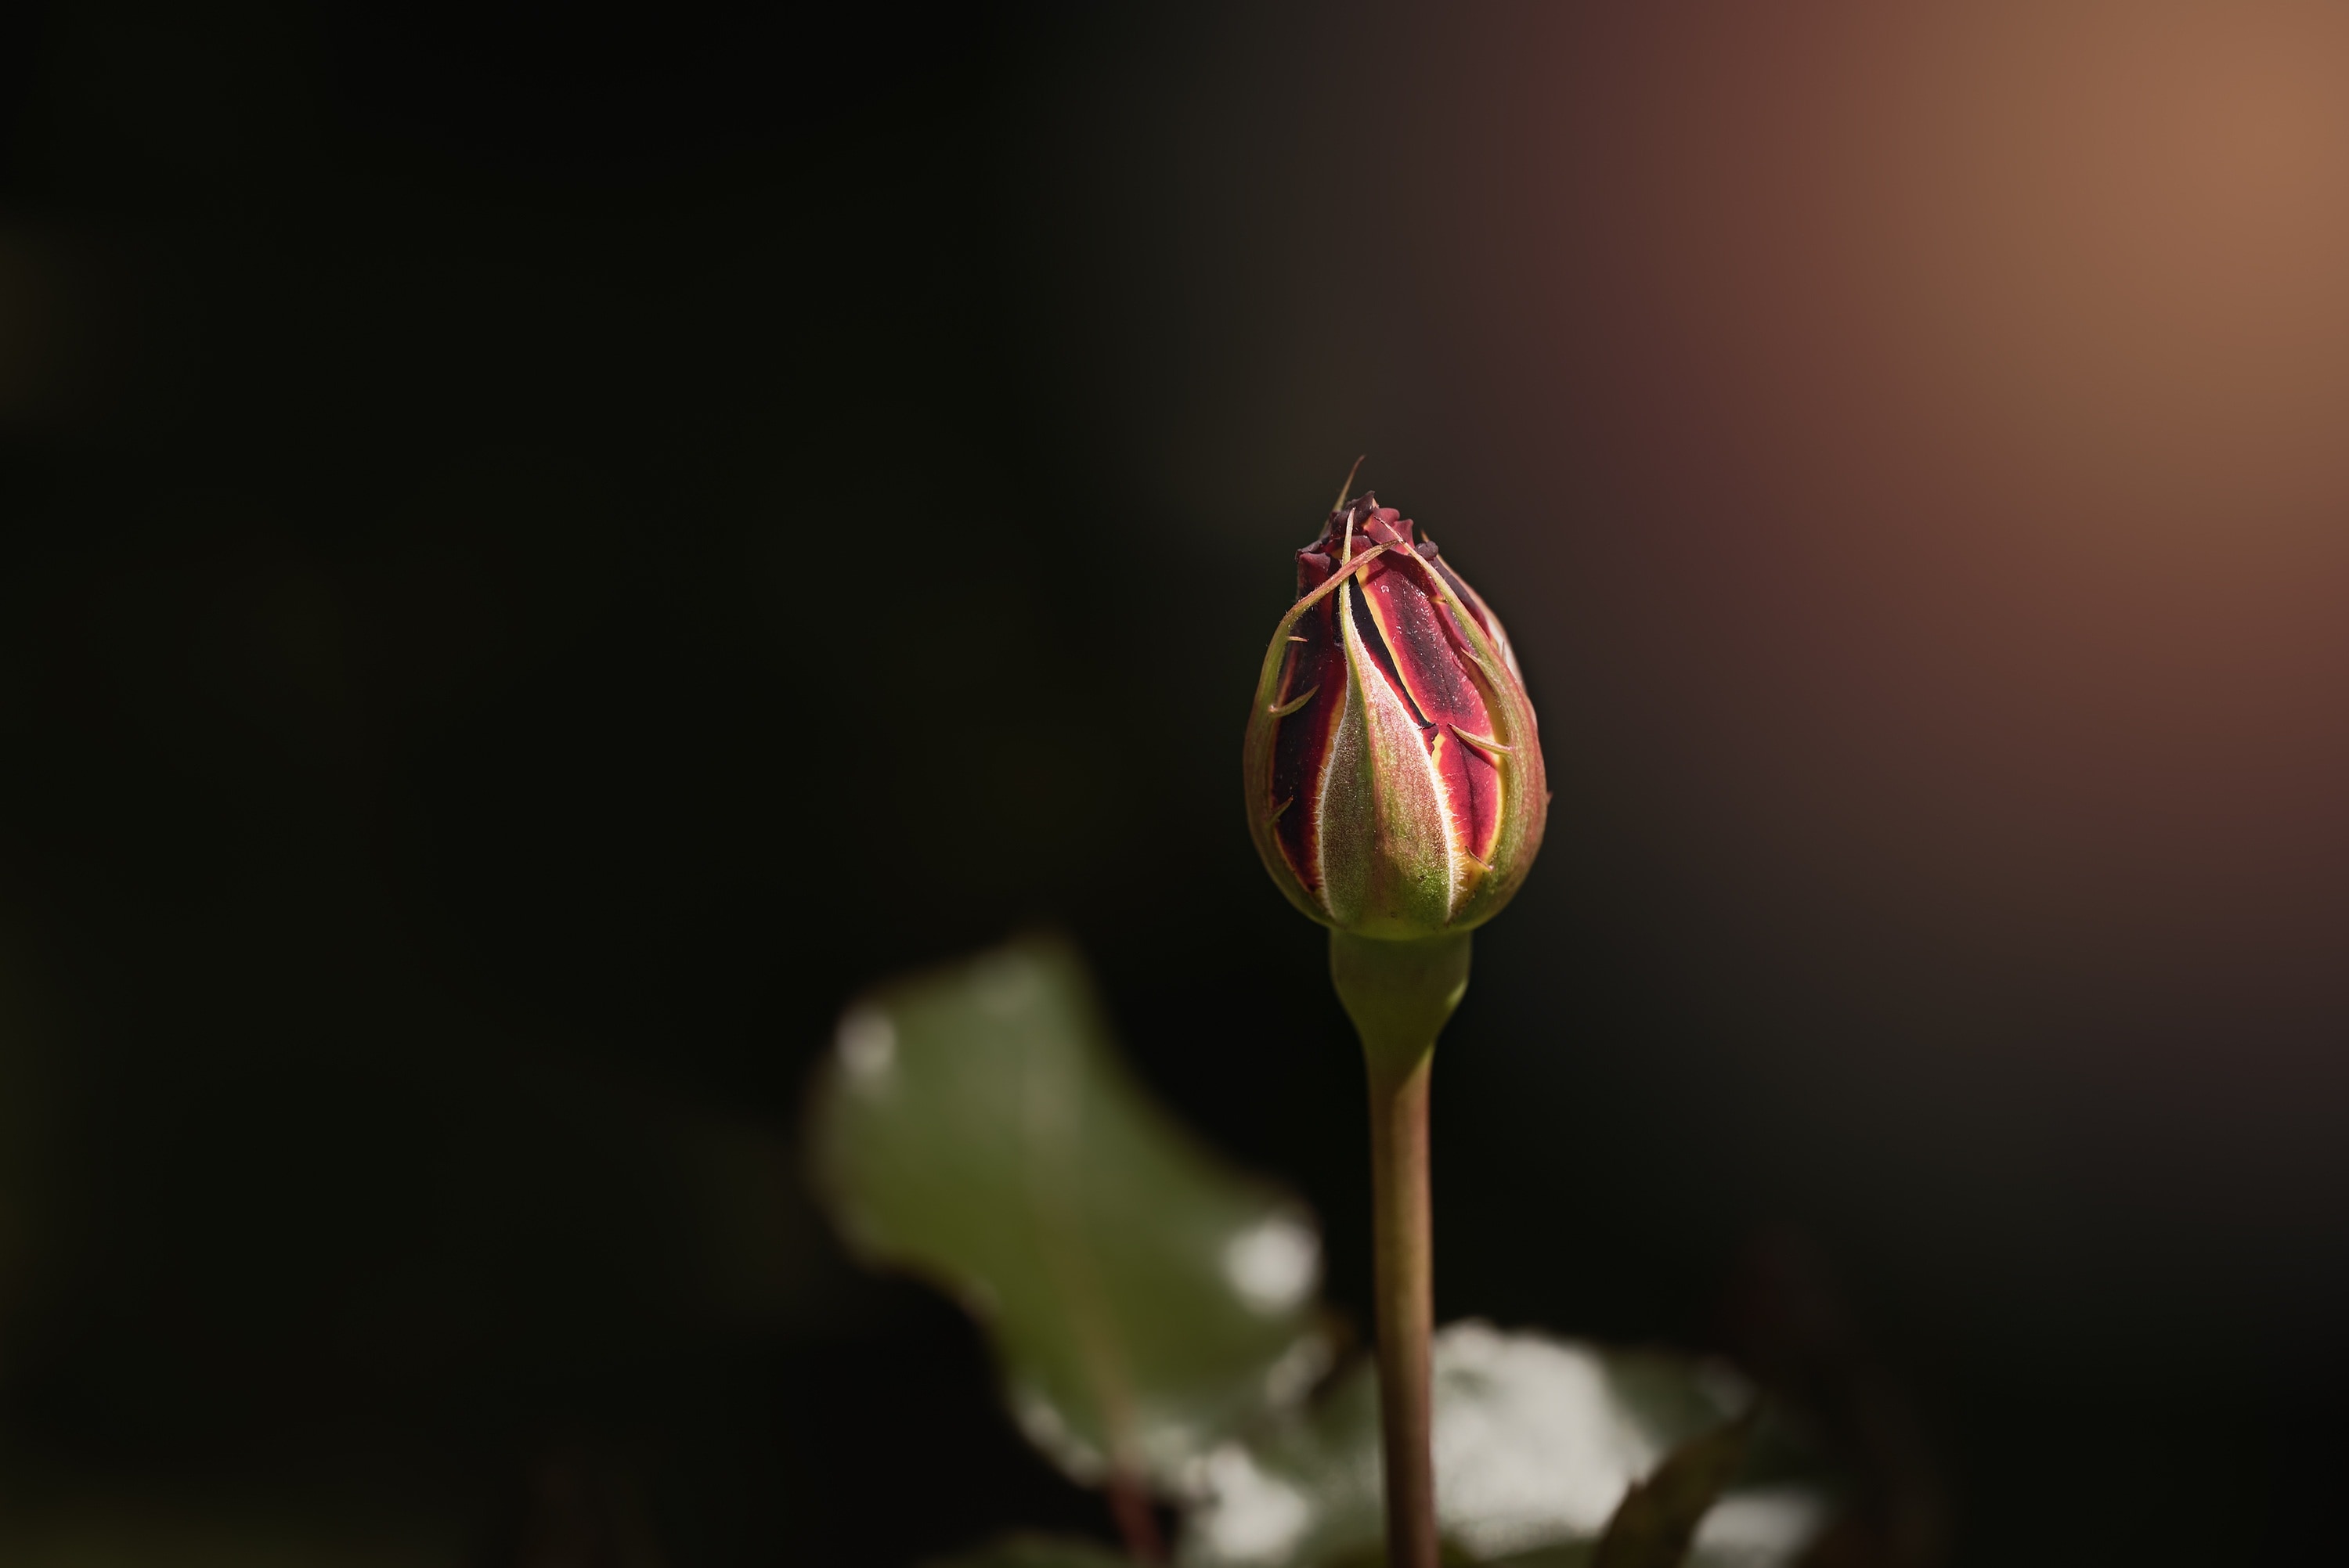 pink flower bud